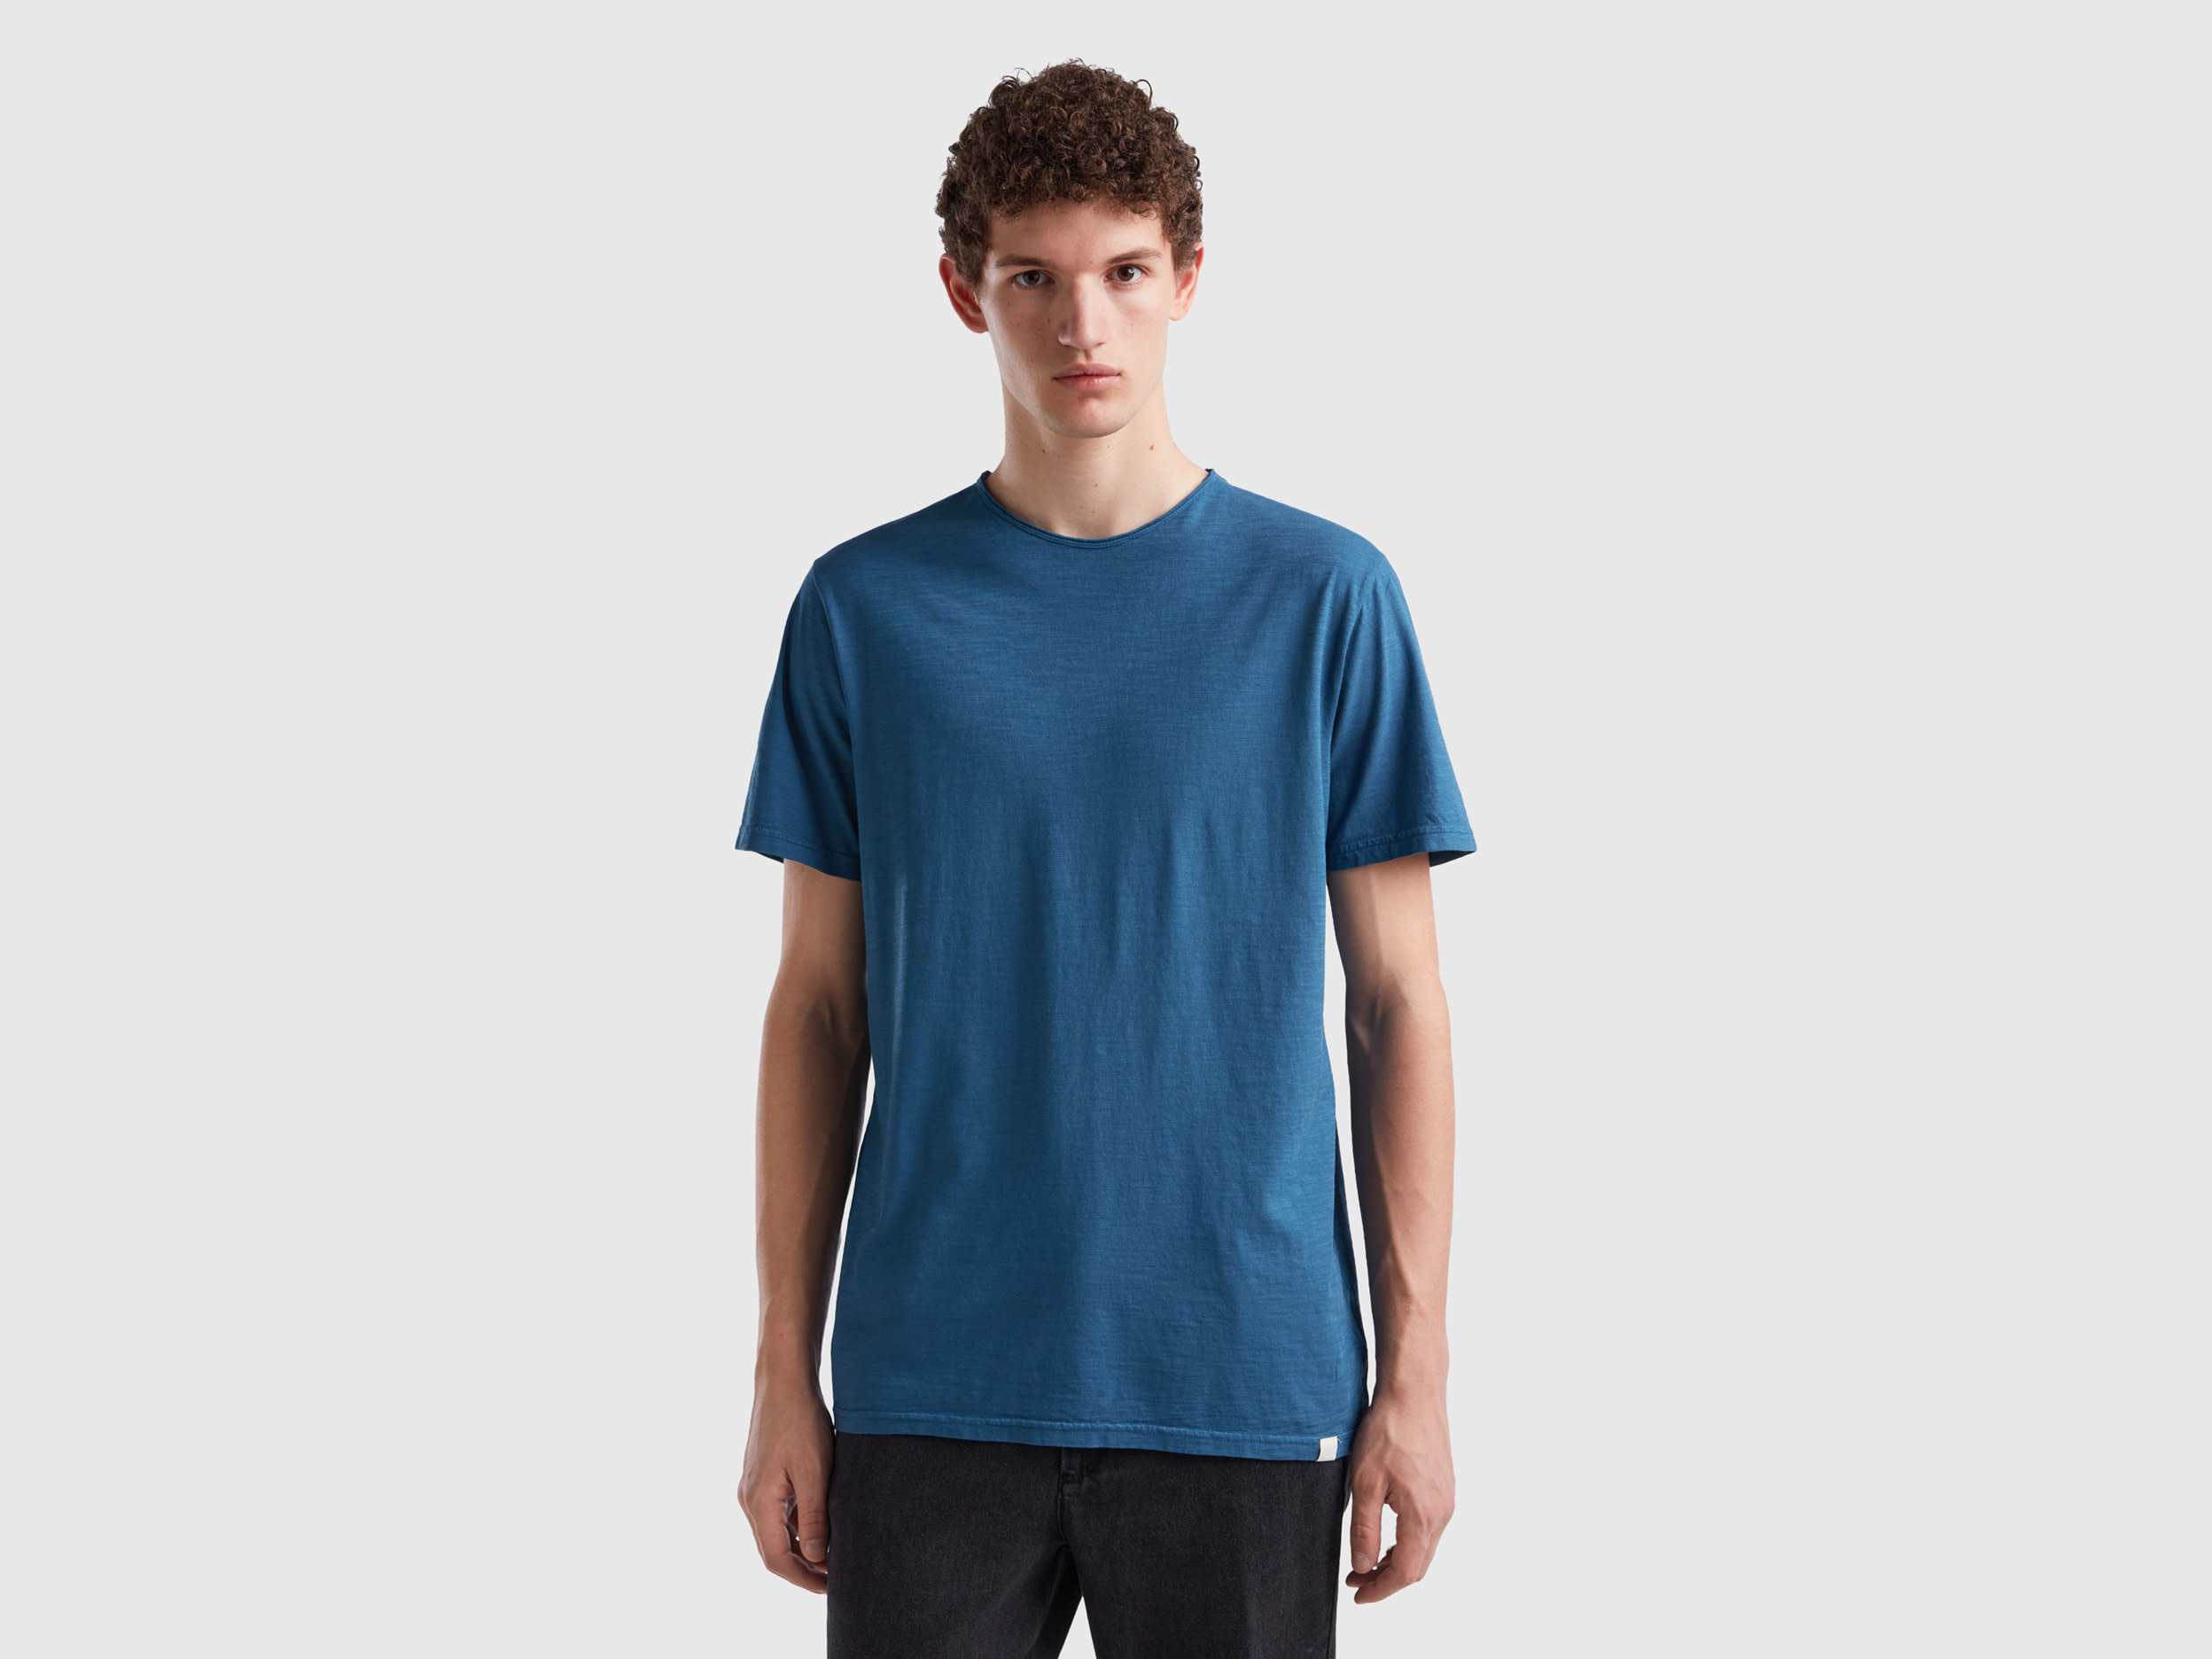 Benetton, Air Force Blue T-shirt In Slub Cotton, size XS, Air Force Blue, Men